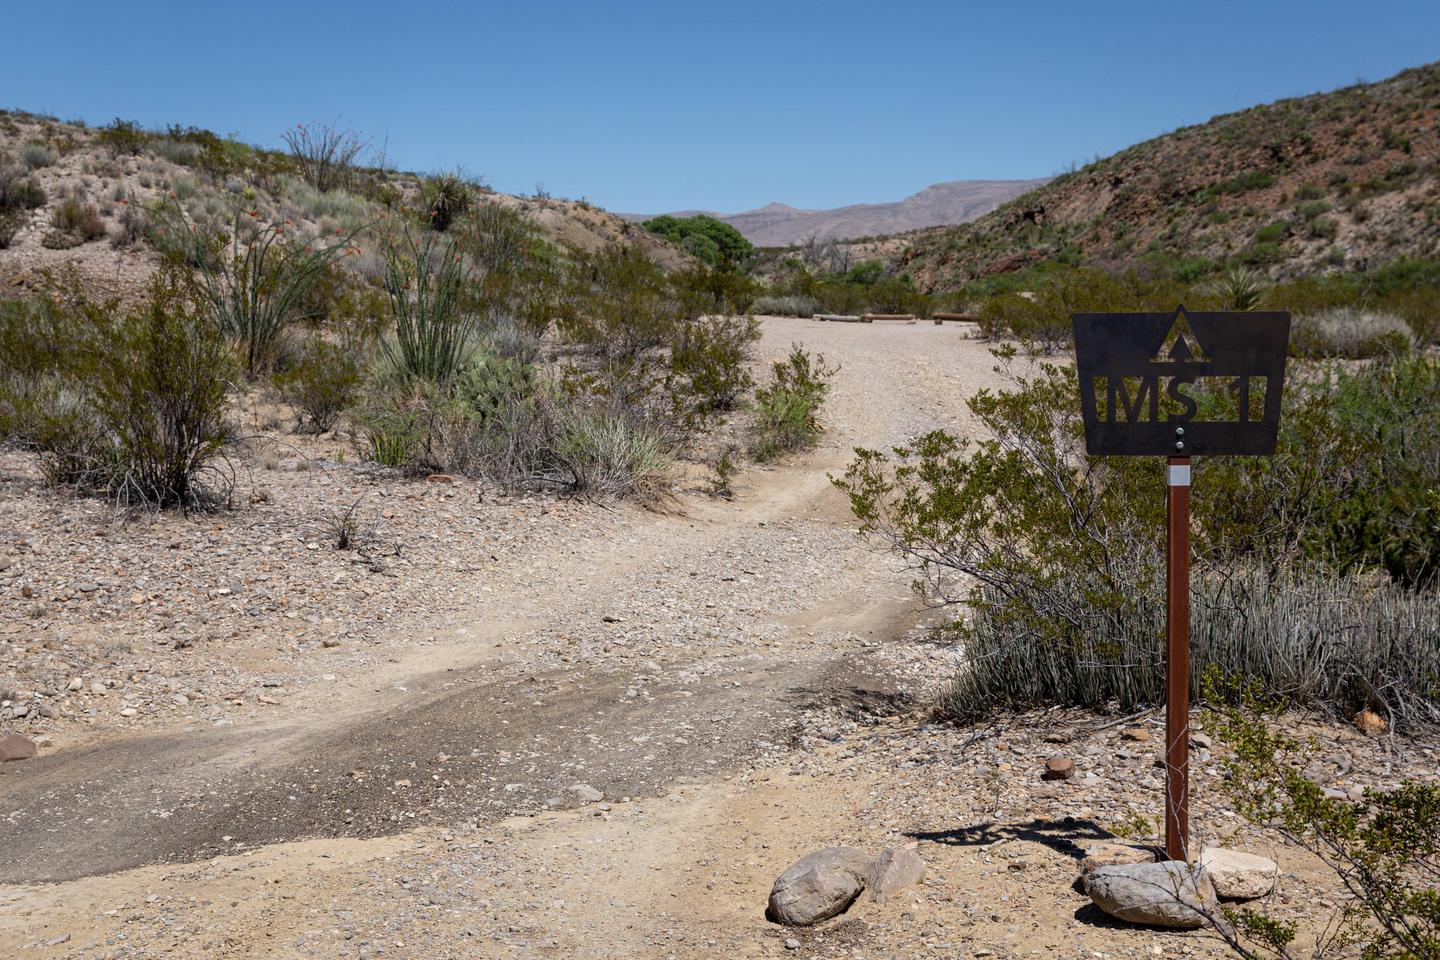 Campsite nestled between desert hillsAccess and campsite marker 